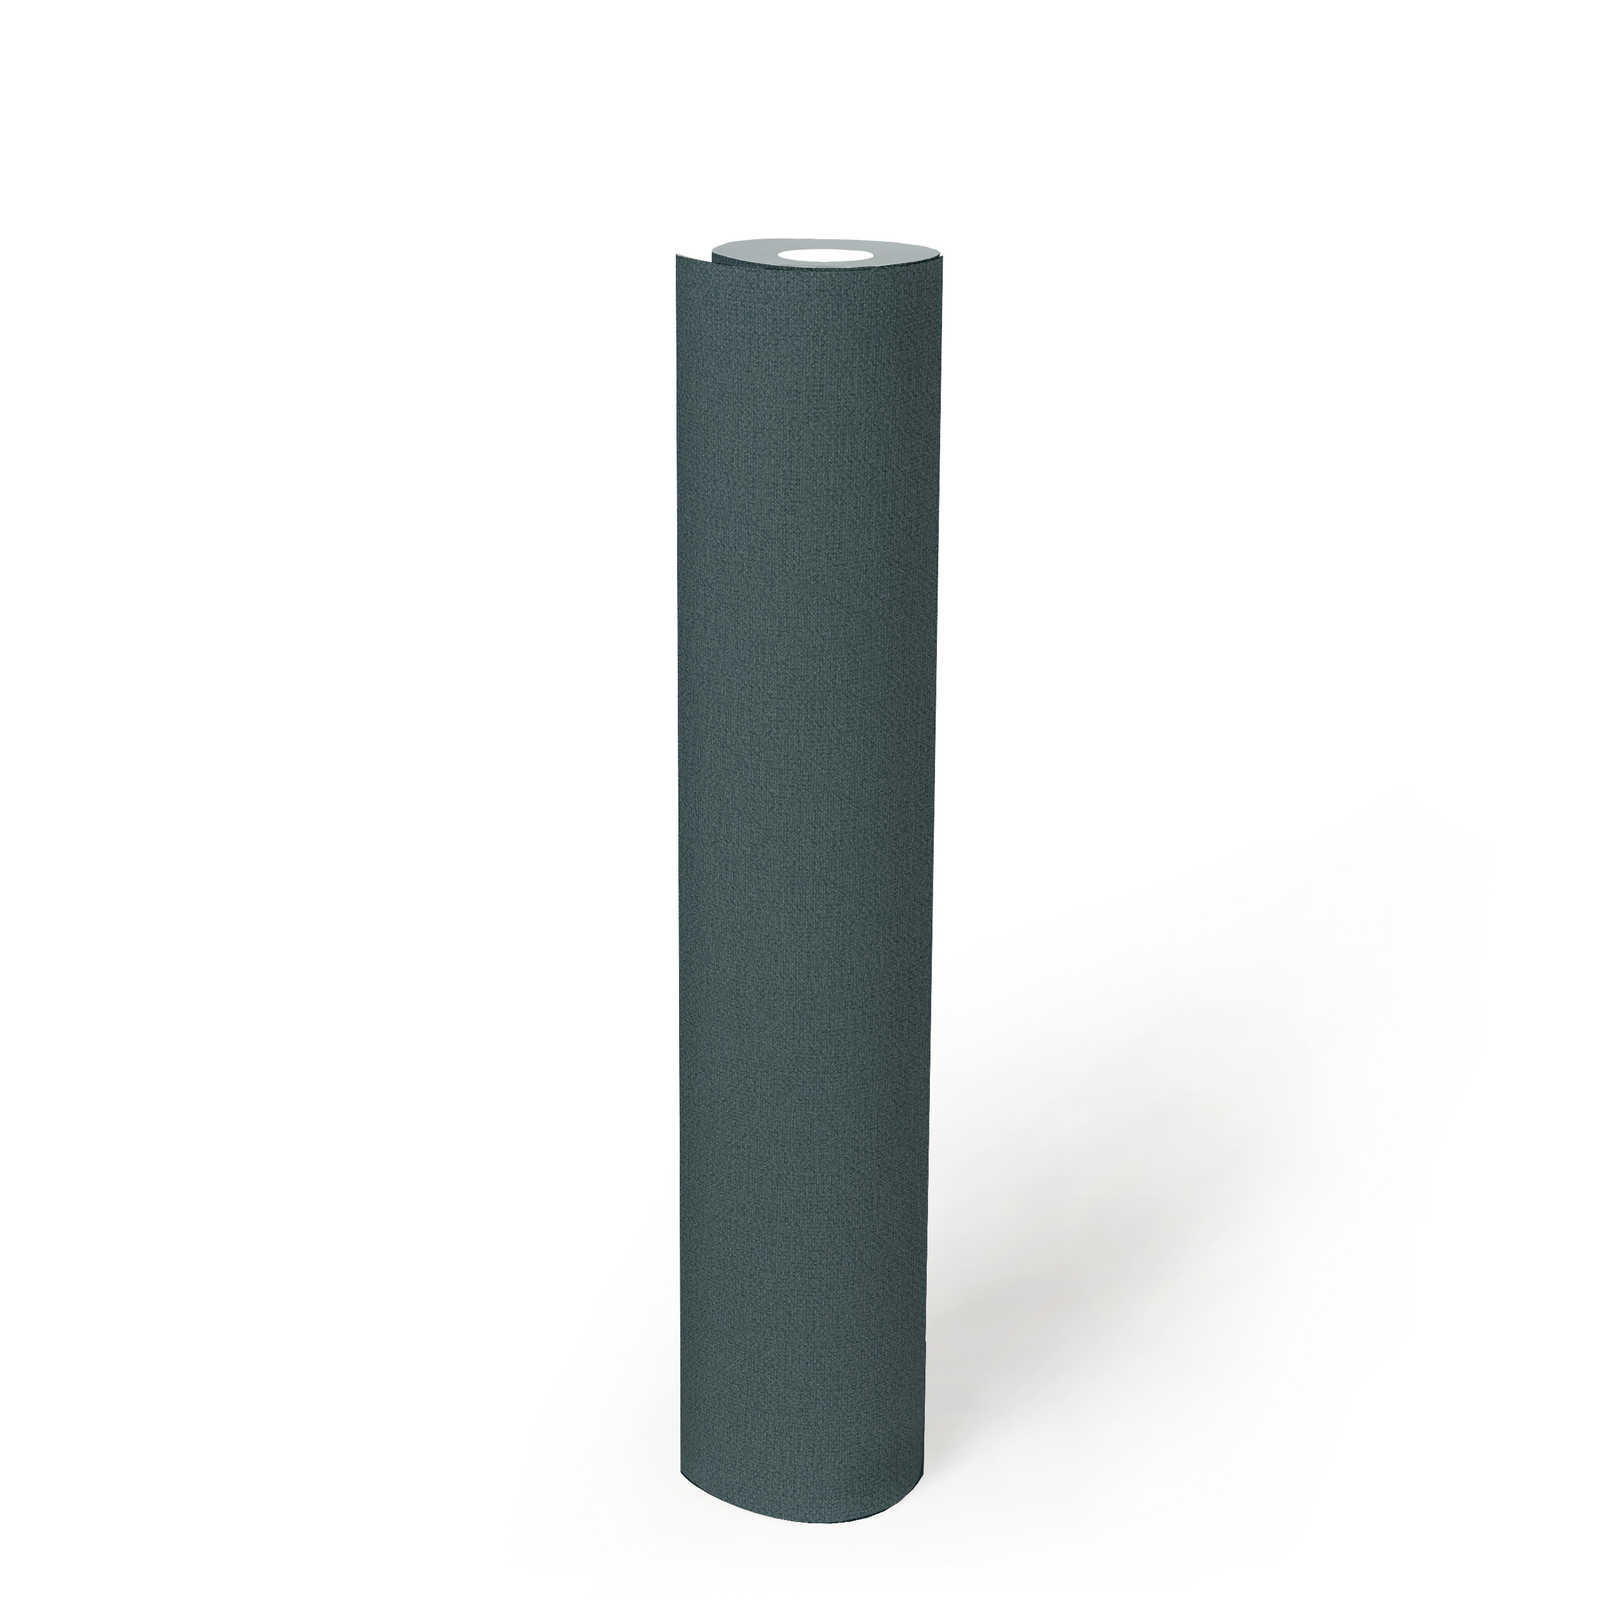             Einfarbige Vliestapete mit Leinenoptik PVC-frei – Blau, Grau
        